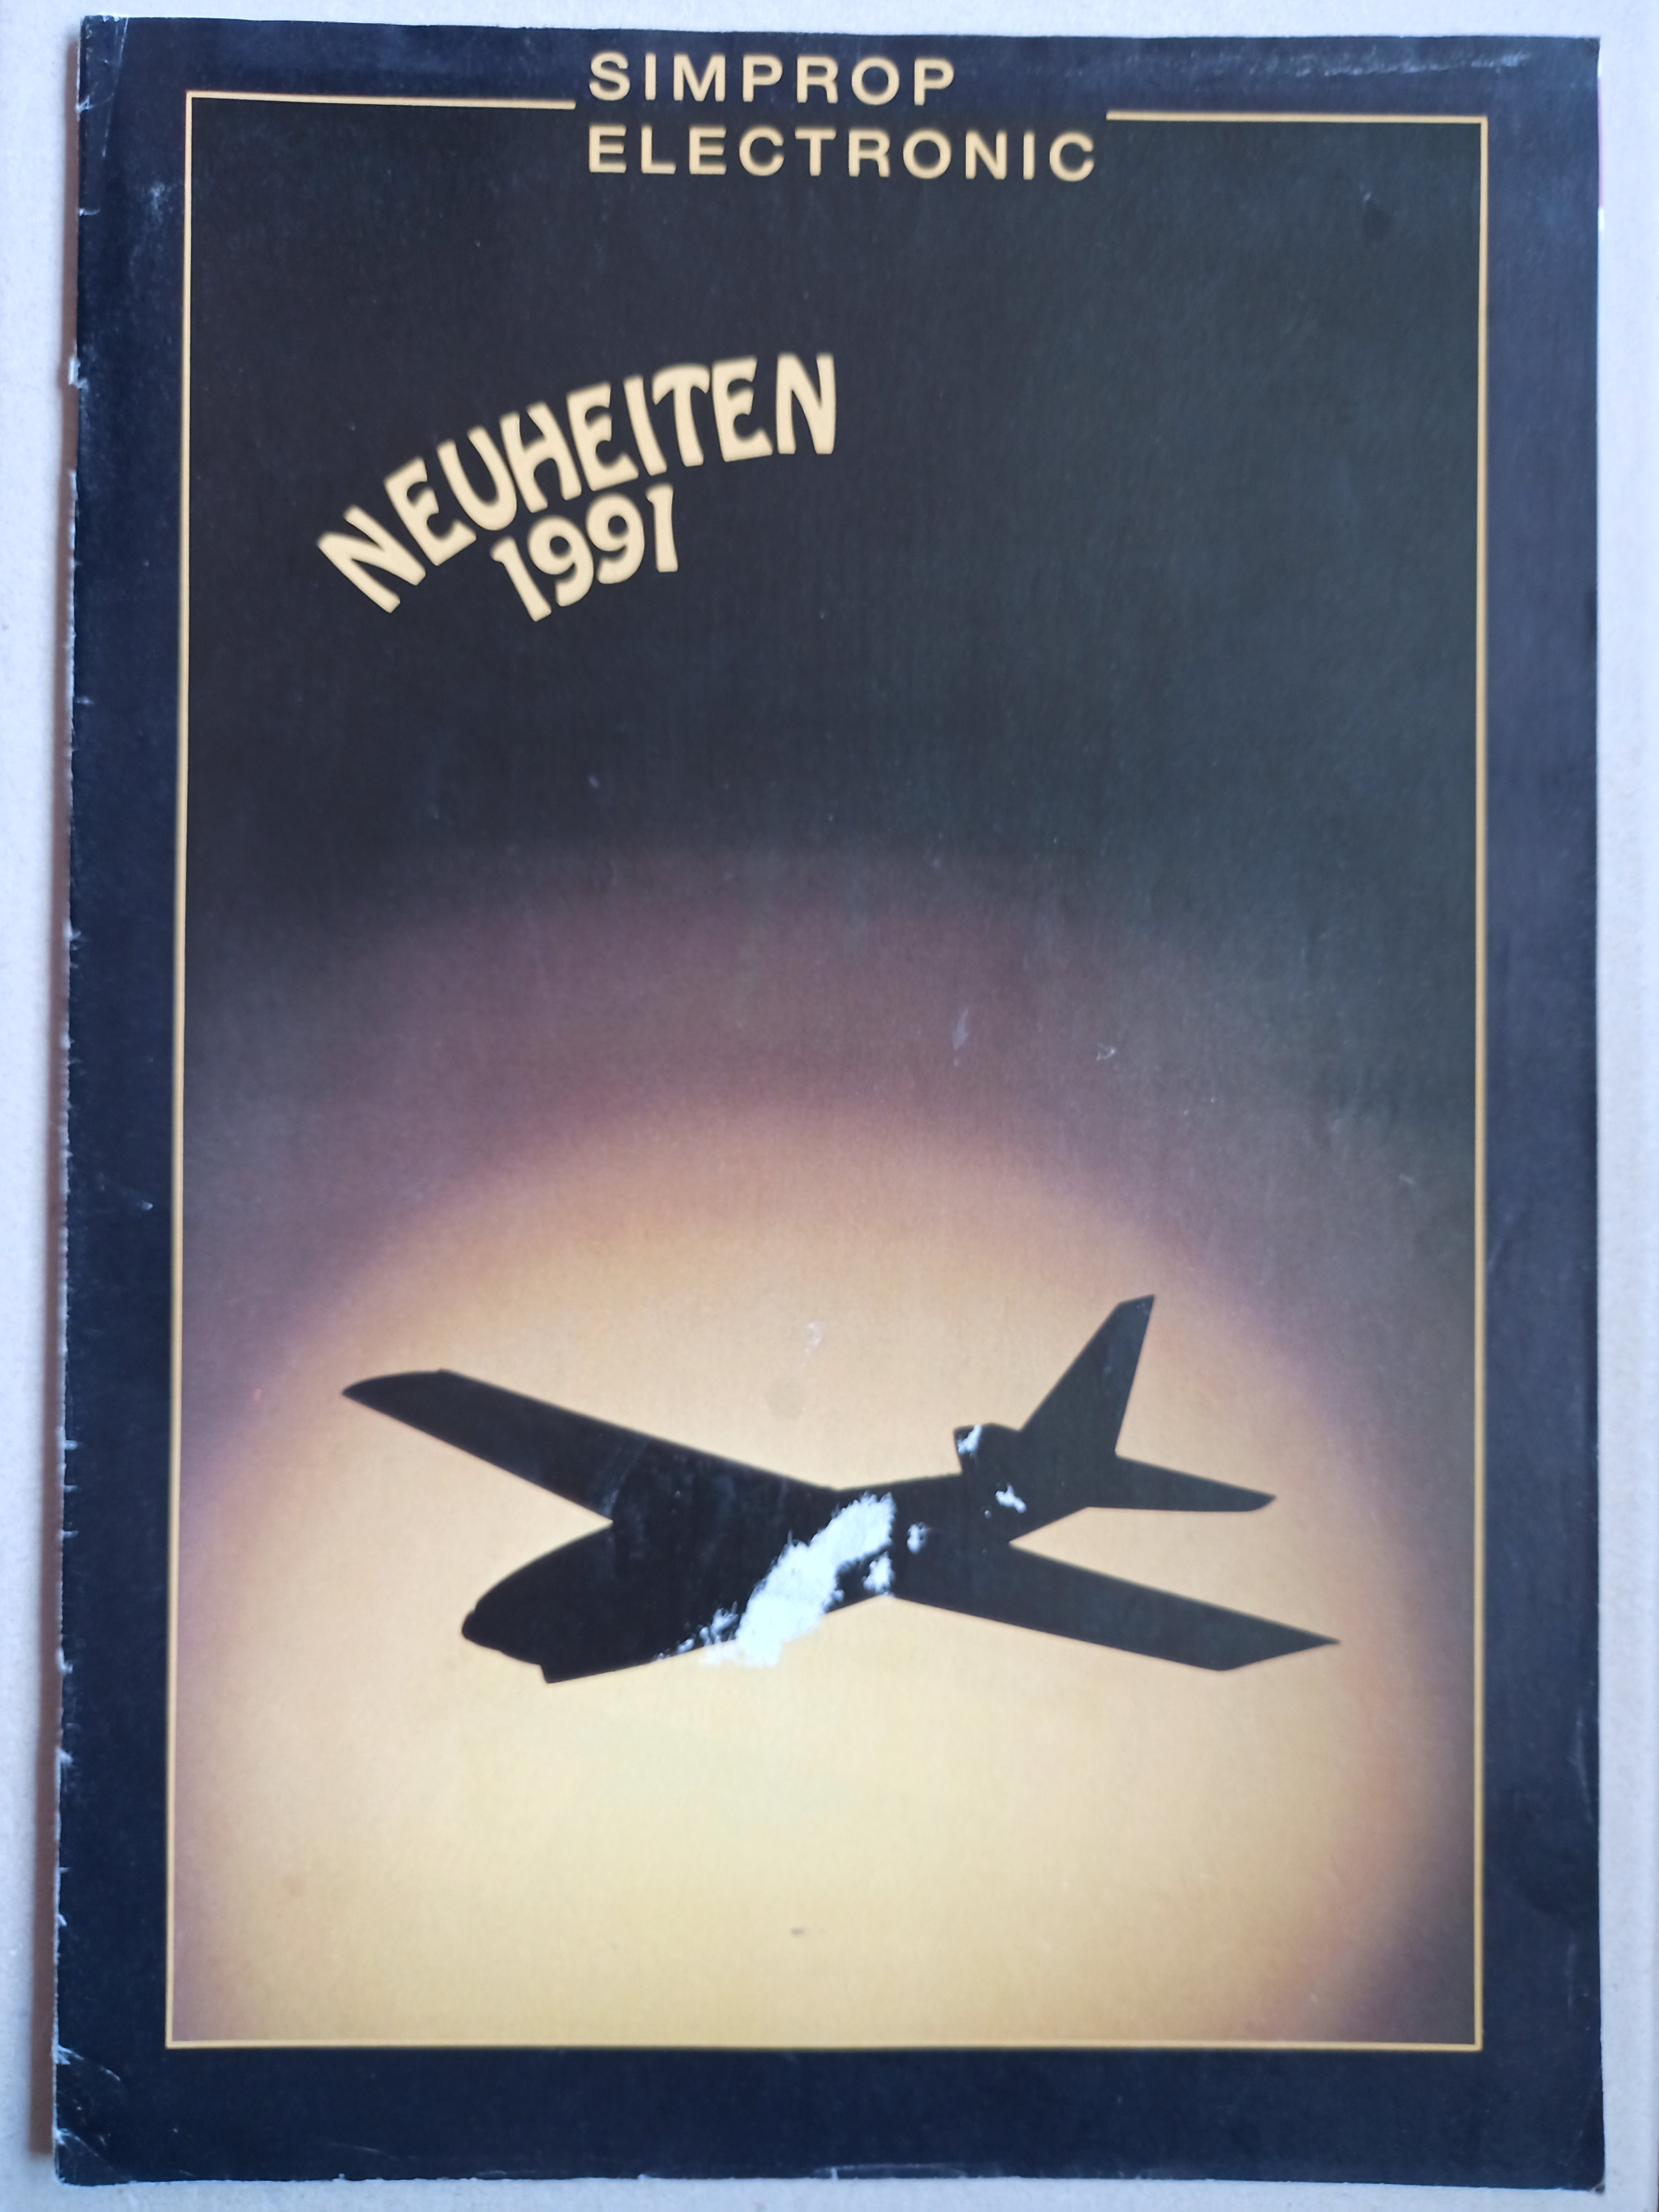 Simprop Prospekt 1991 (Deutsches Segelflugmuseum mit Modellflug CC BY-NC-SA)